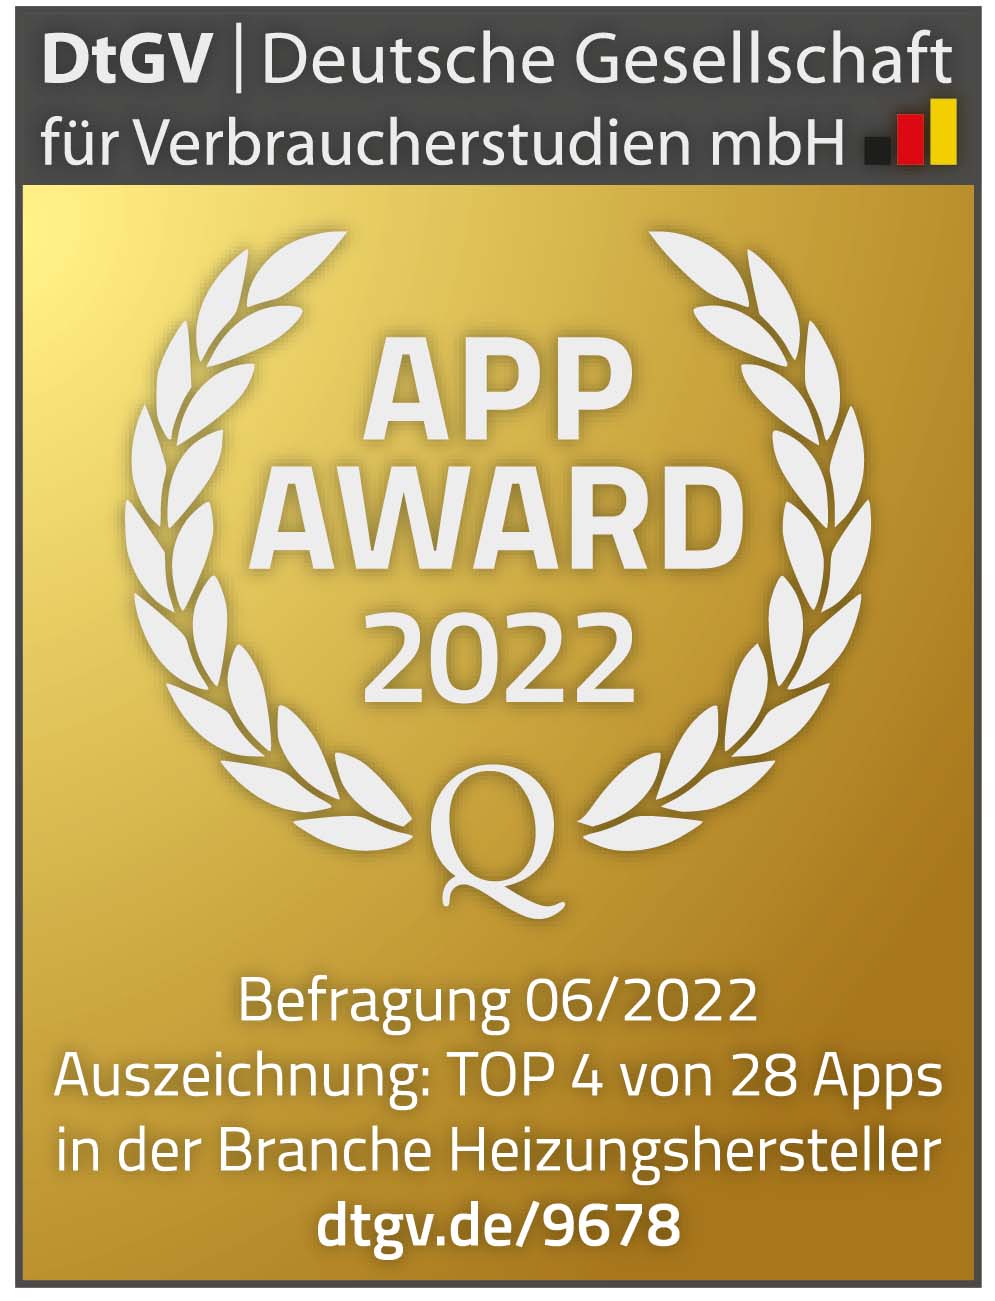 Top App Award 4. místo.